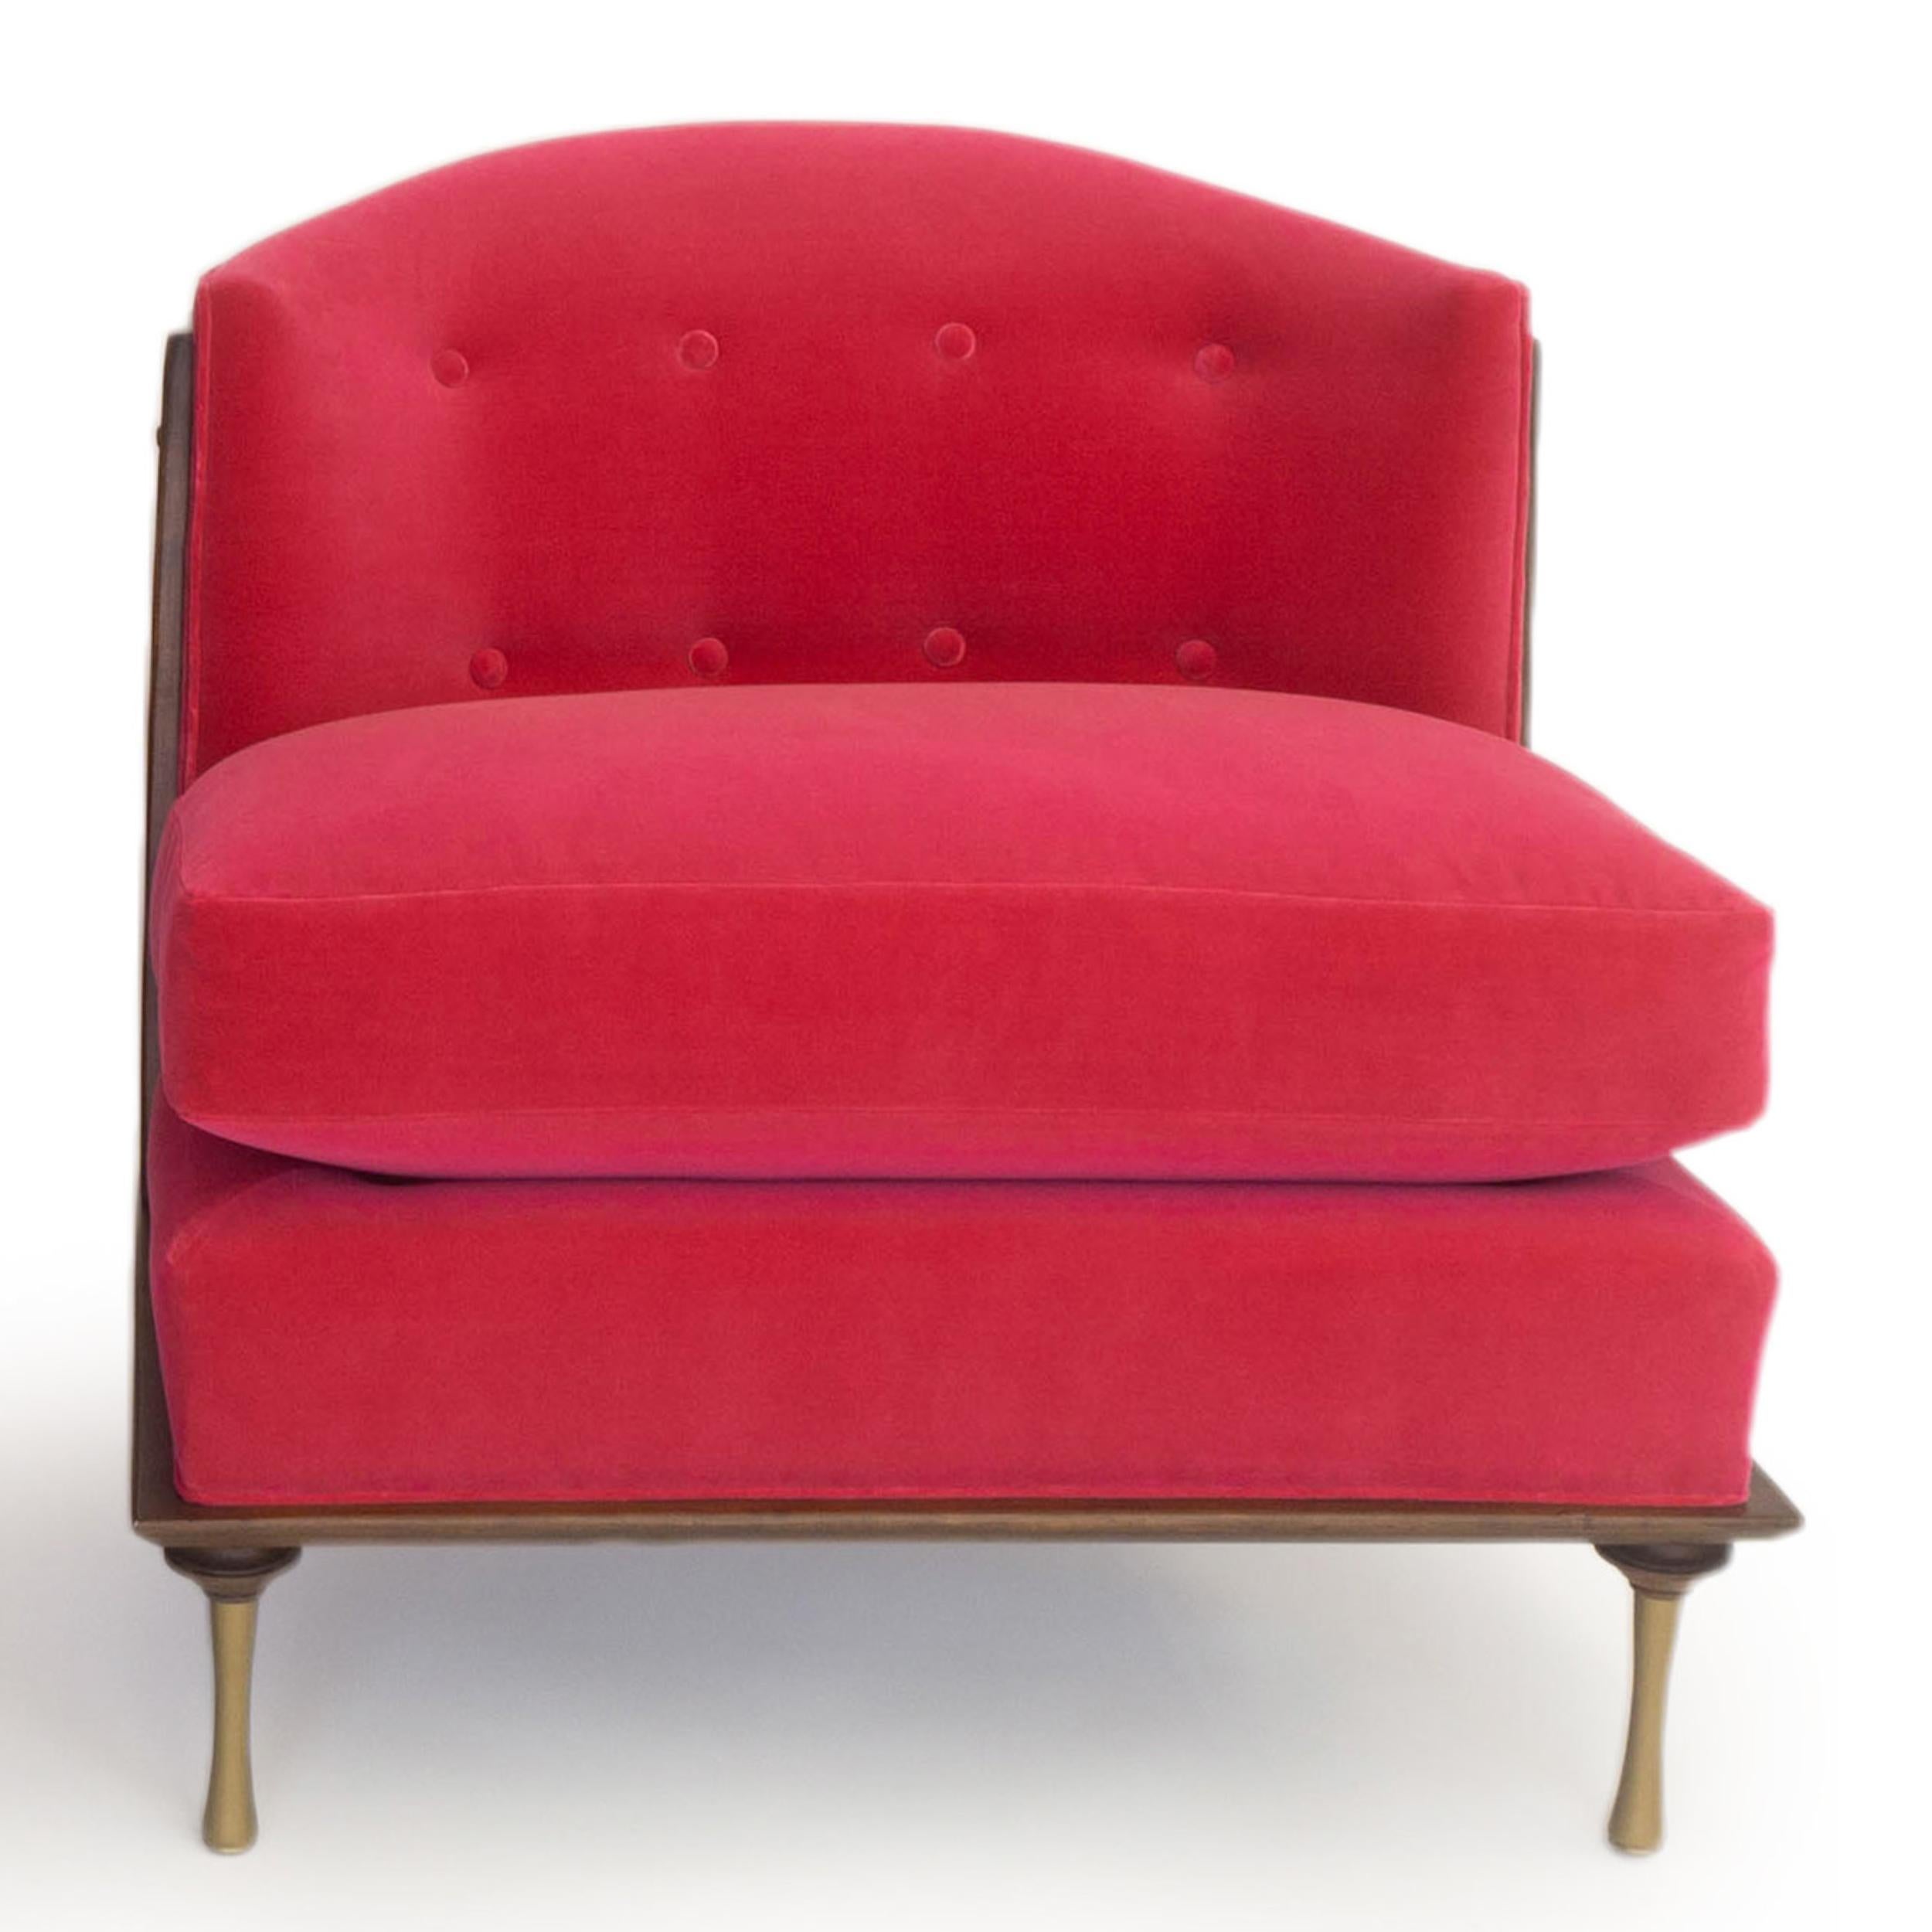 American Art Deco Inspired Slipper Chair For Sale